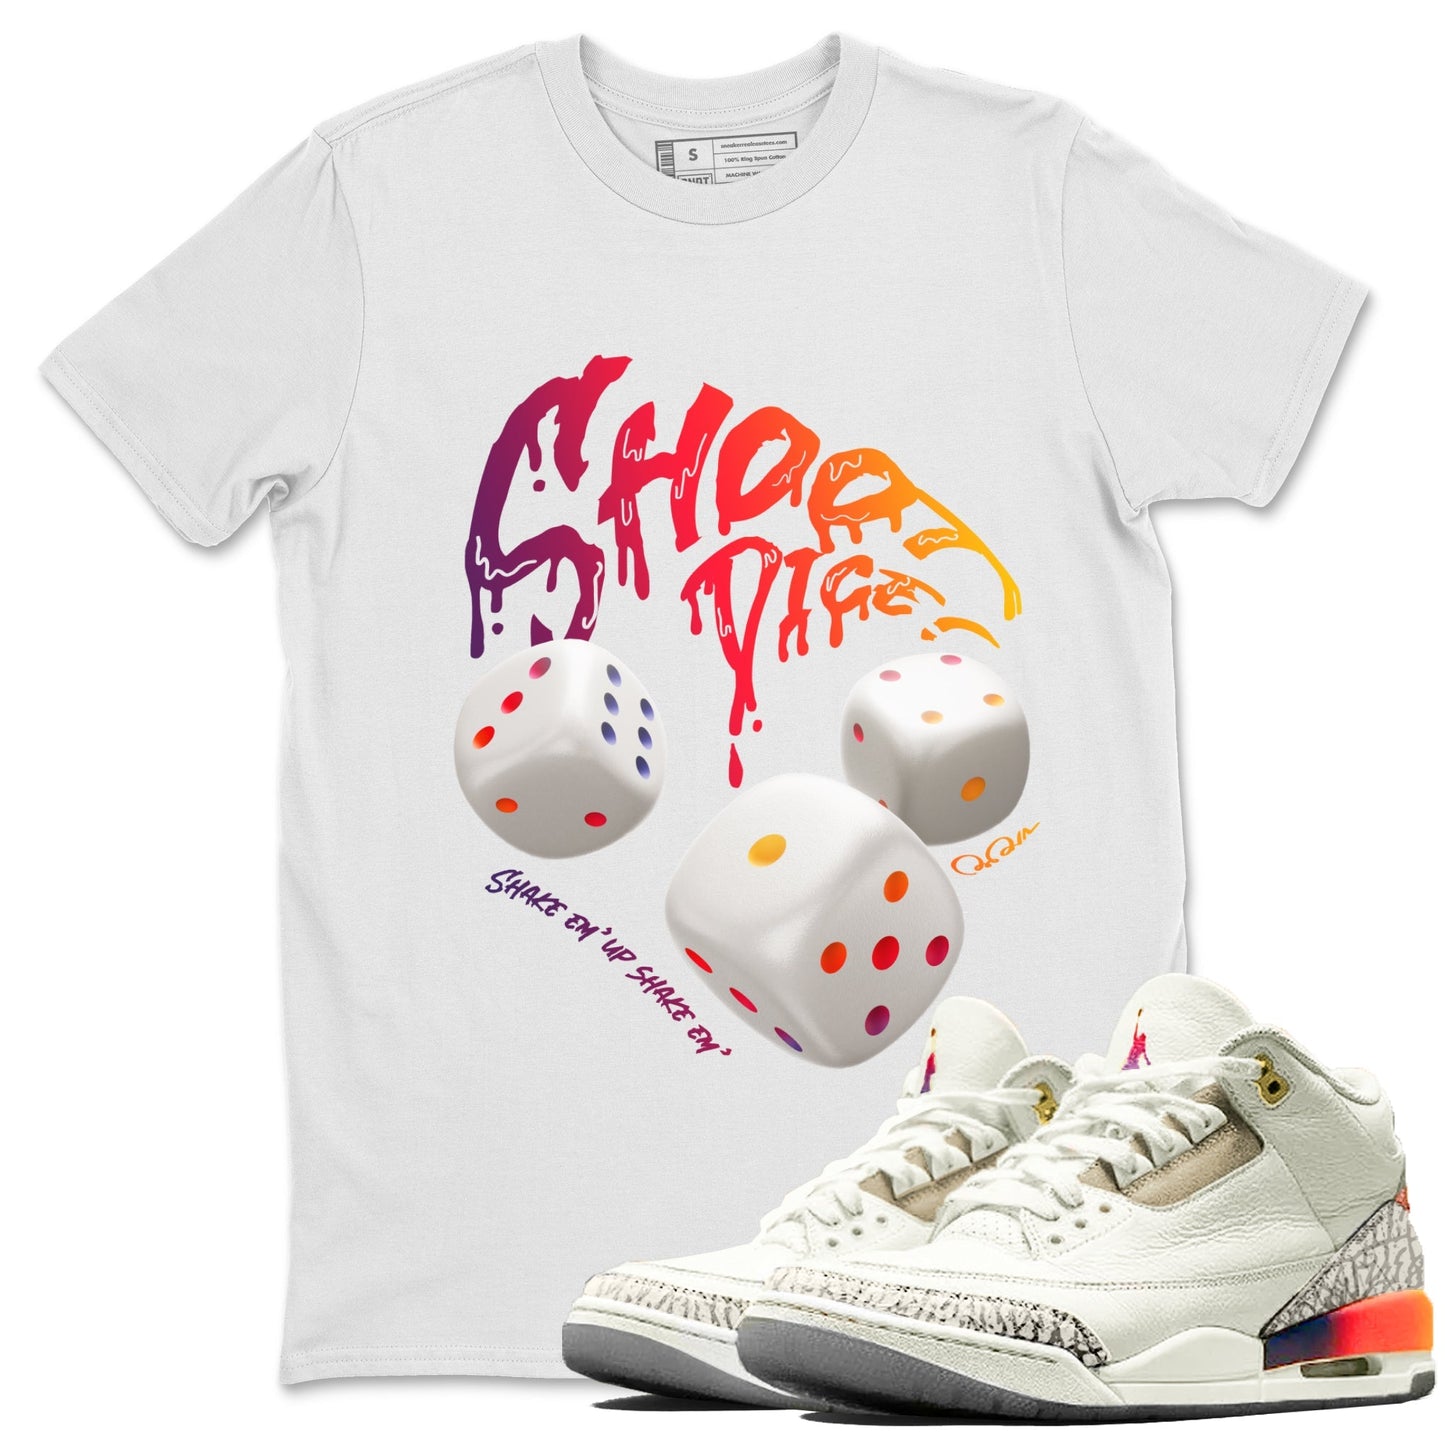 Air Jordan 3 J Balvin shirt to match jordans Shoot Dice Streetwear Sneaker Shirt AJ3 Balvin  Drip Gear Zone Sneaker Matching Clothing LGBTQ Gay Pride T-Shirt Unisex White 1 T-Shirt